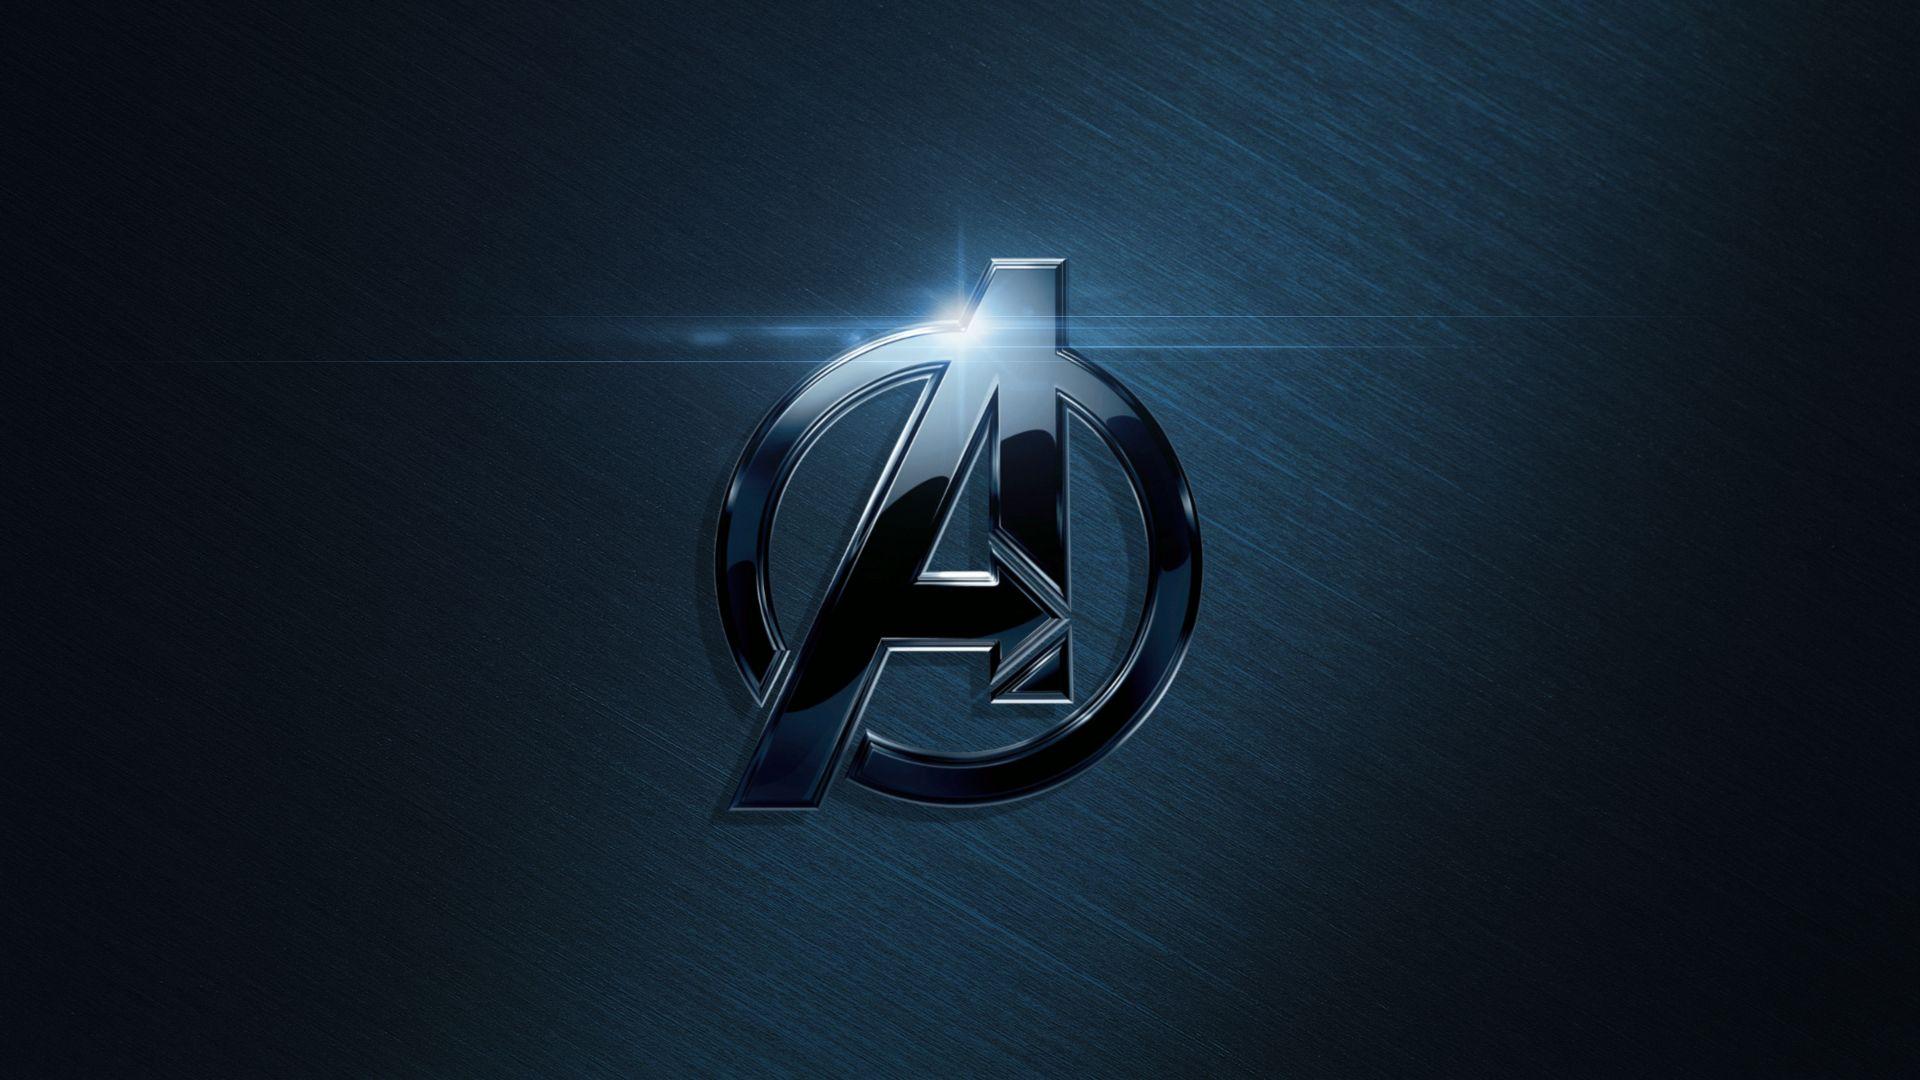 The Avengers Wallpaper, Movie, Best HD 1080p 17. My nerd is